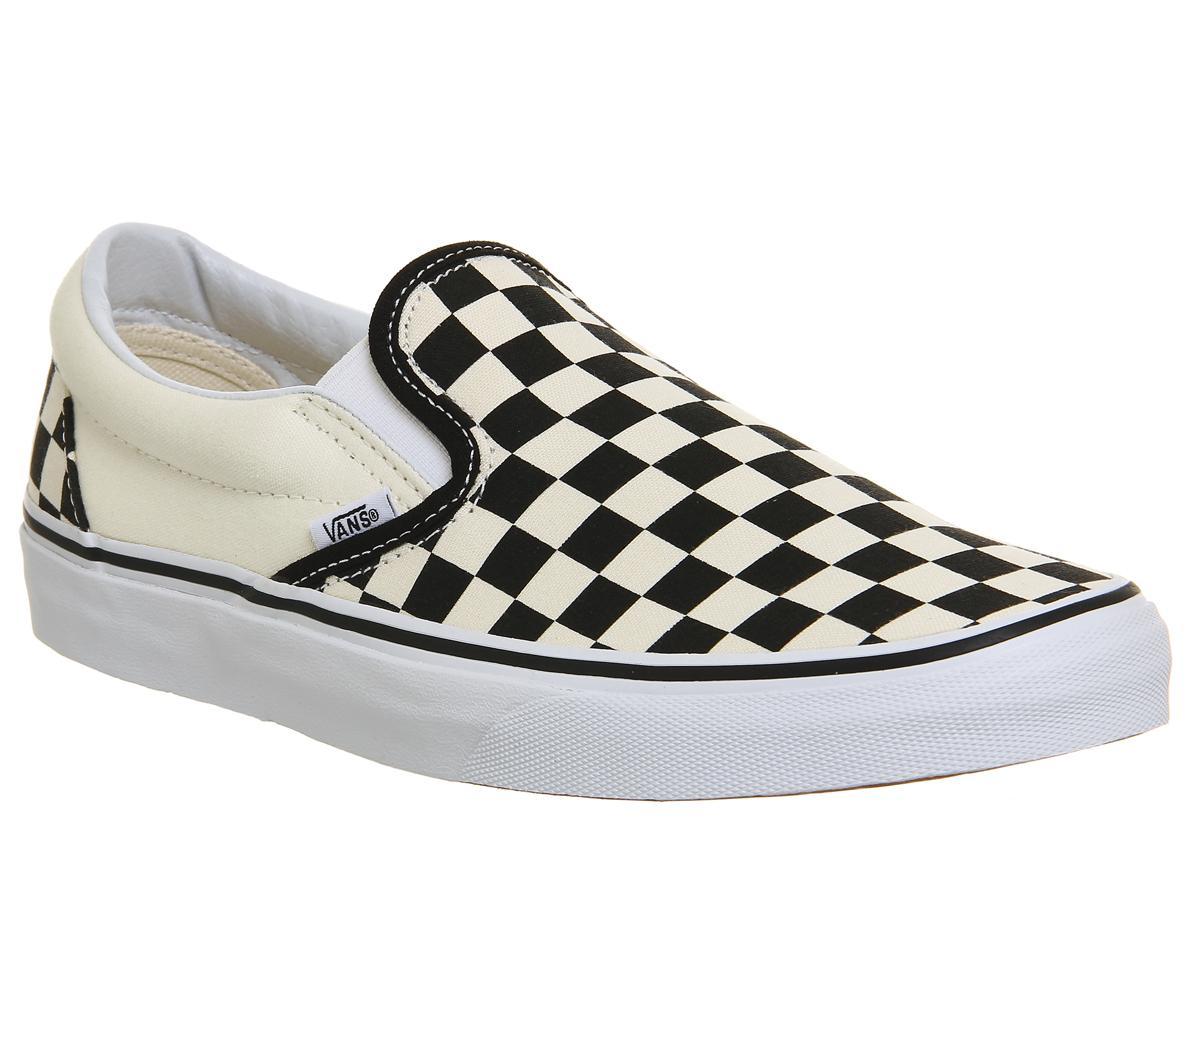 Vans Classic Slip On Flash Trainers Black White Checkerboard - Women's ...